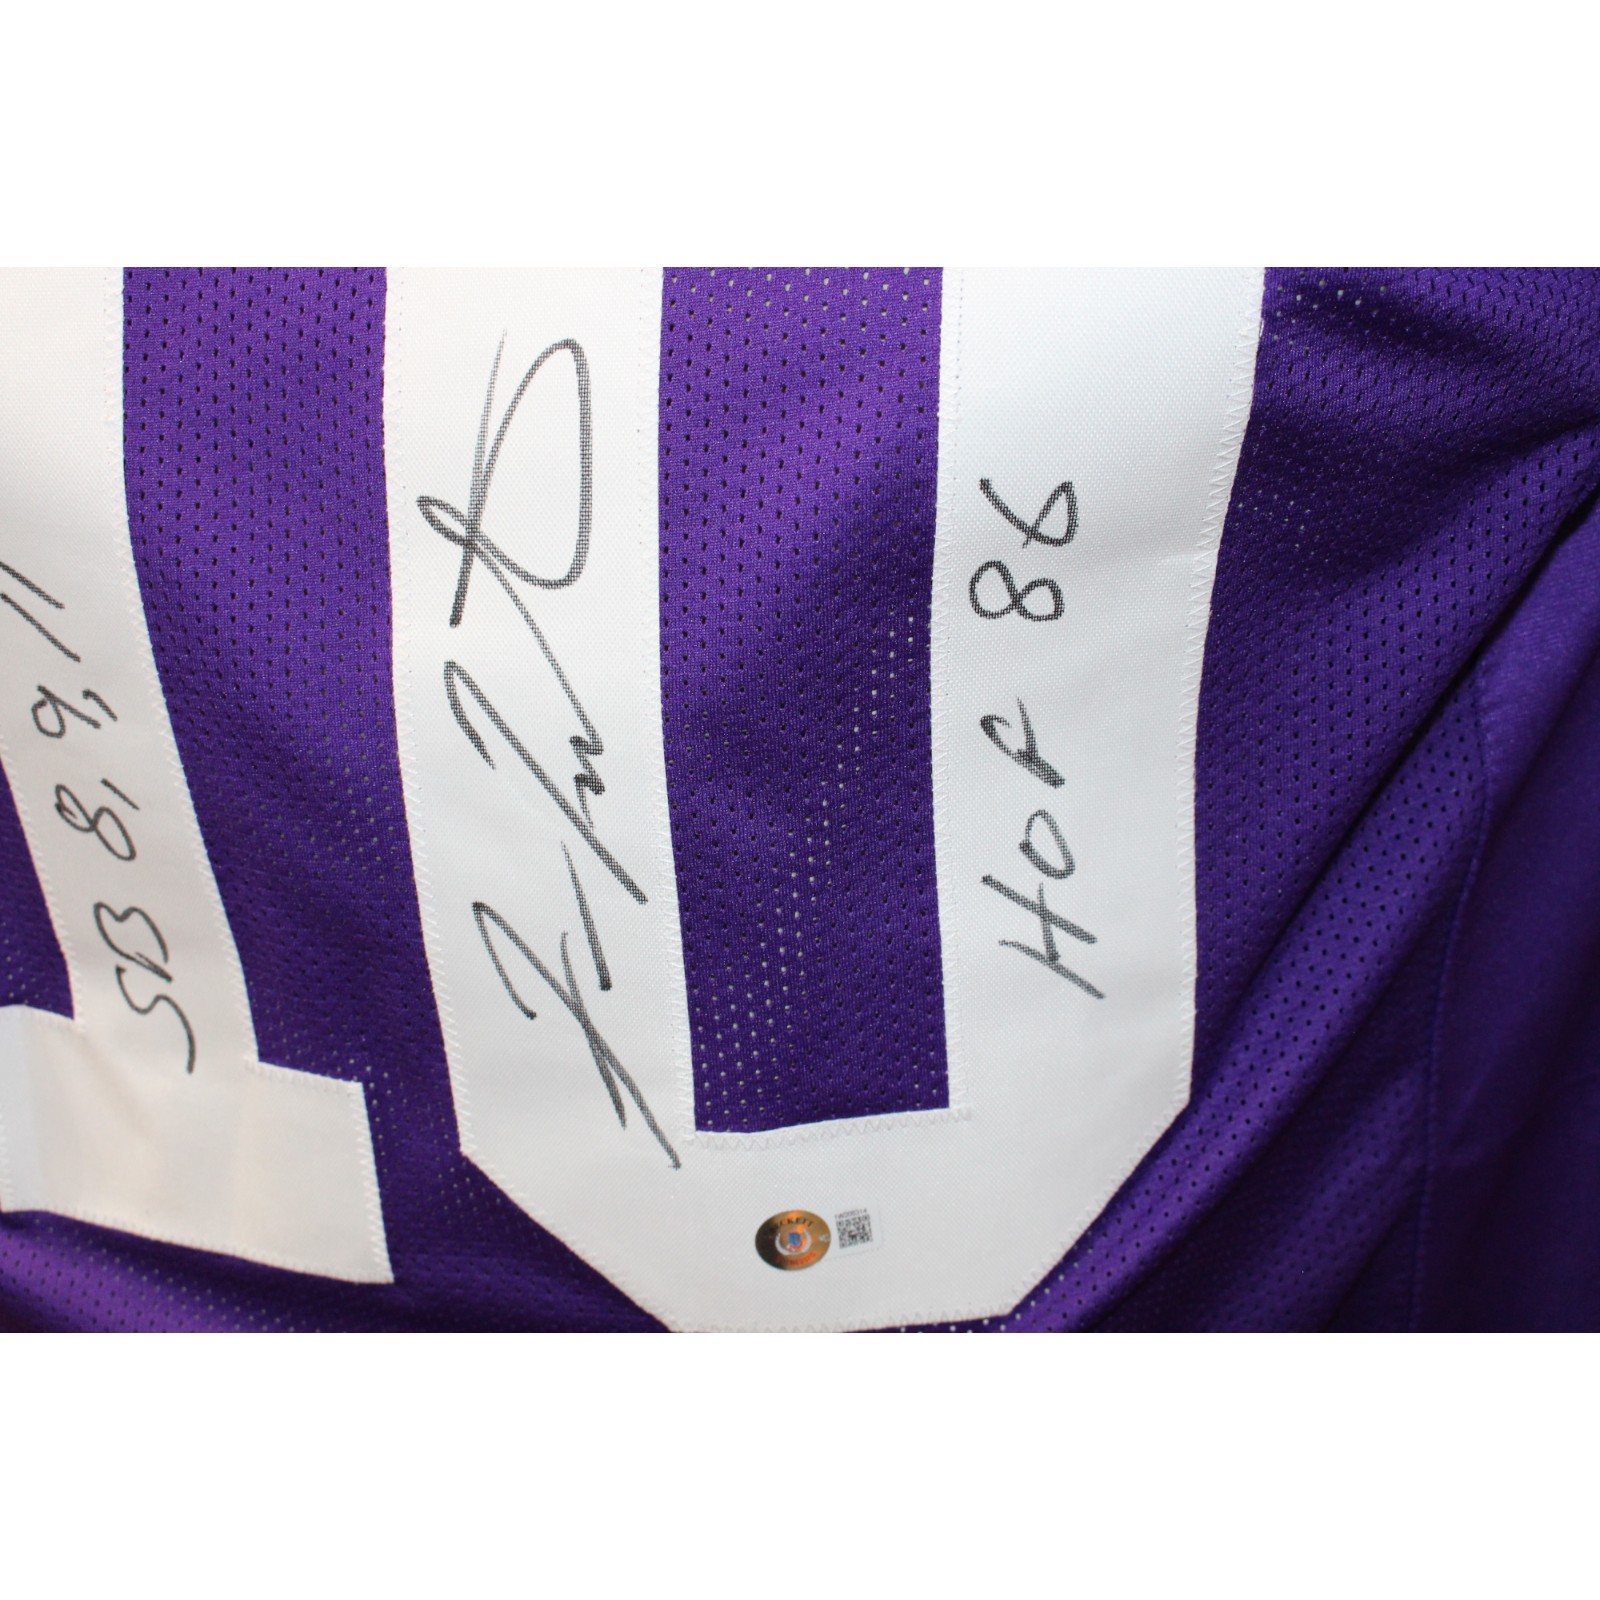 Fran Tarkenton Autographed/Signed Pro Style Purple Jersey 2 insc. Beckett